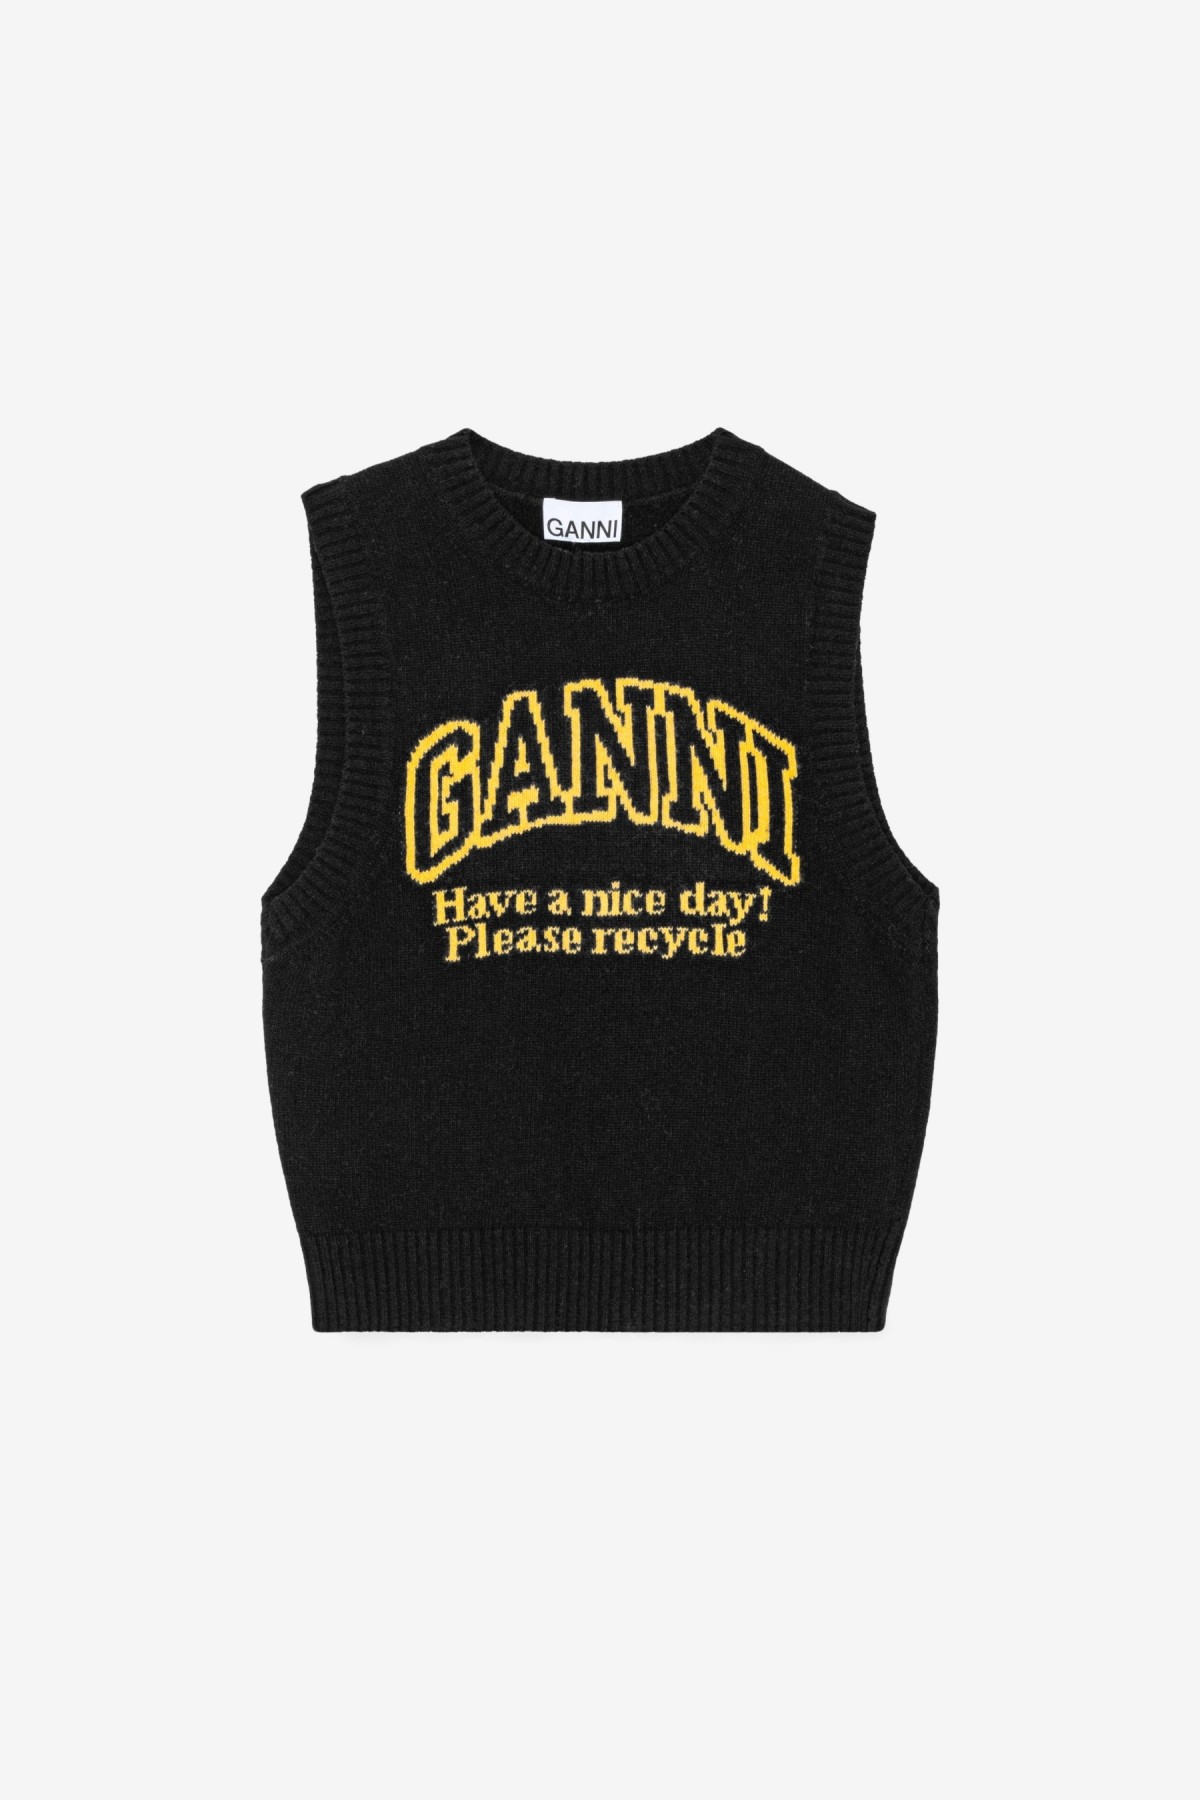 Ganni Graphic O-Neck Vest in Black